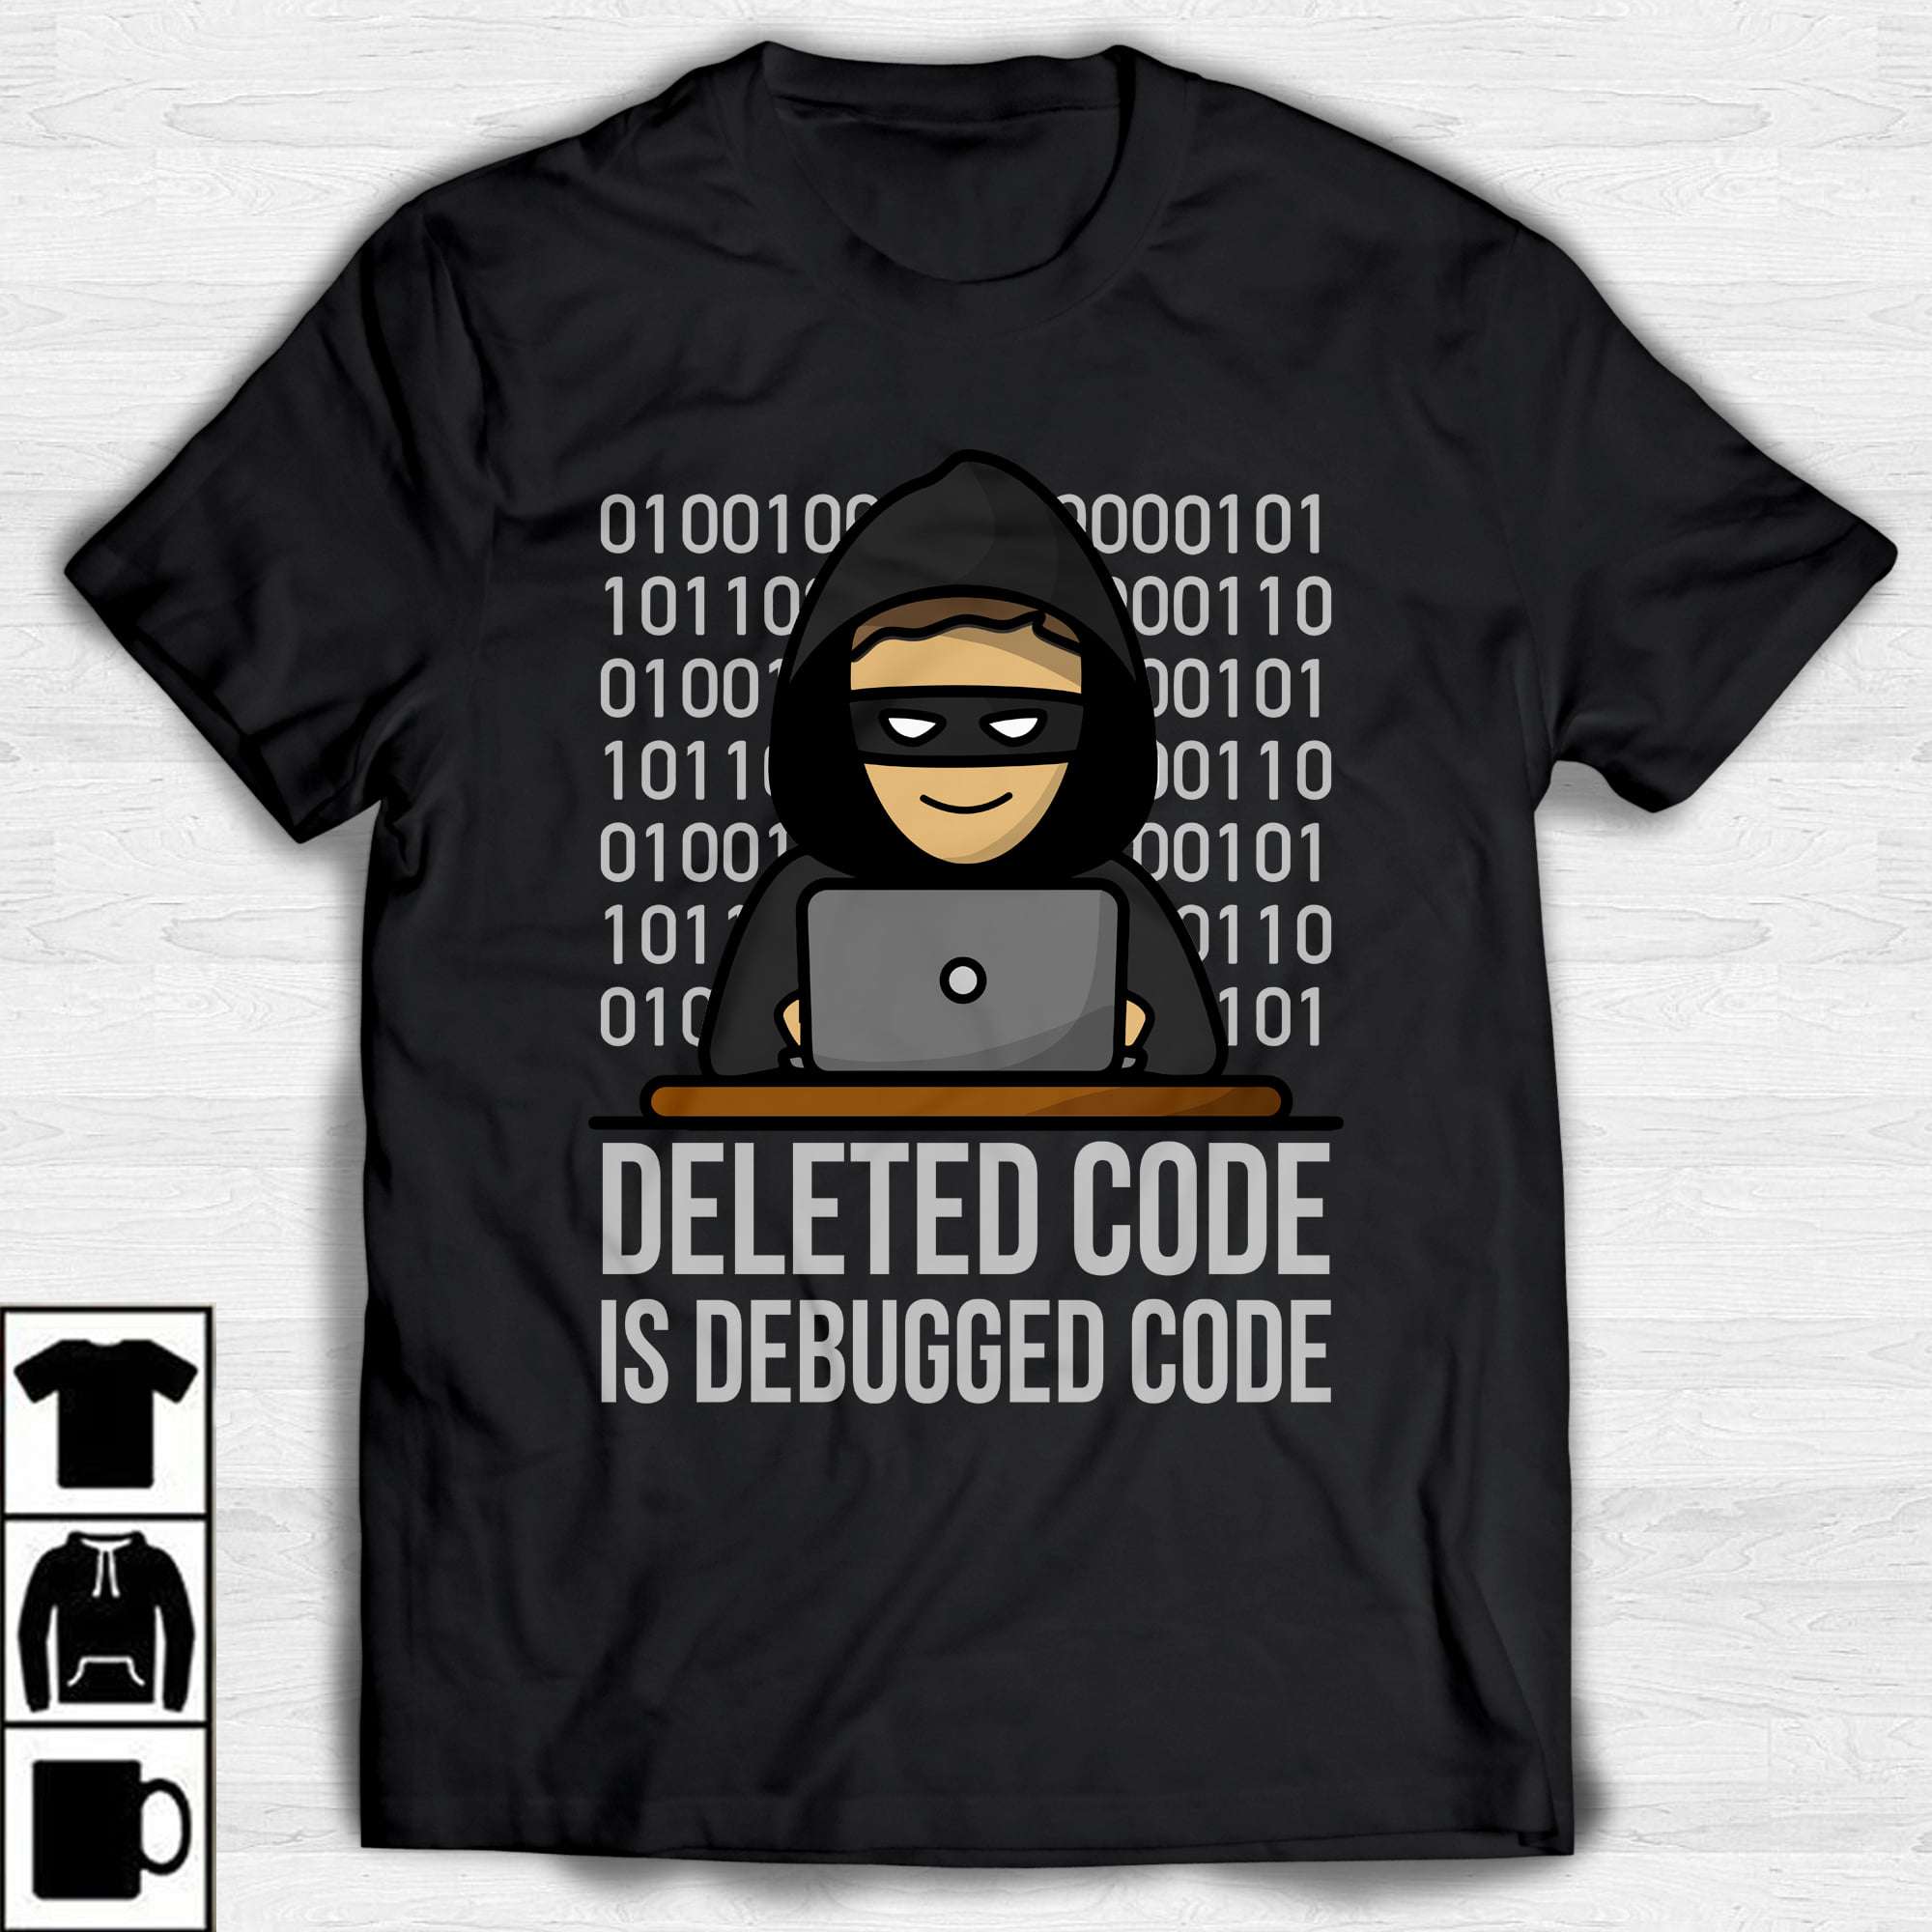 Deleted code is debugged code - Black hacker